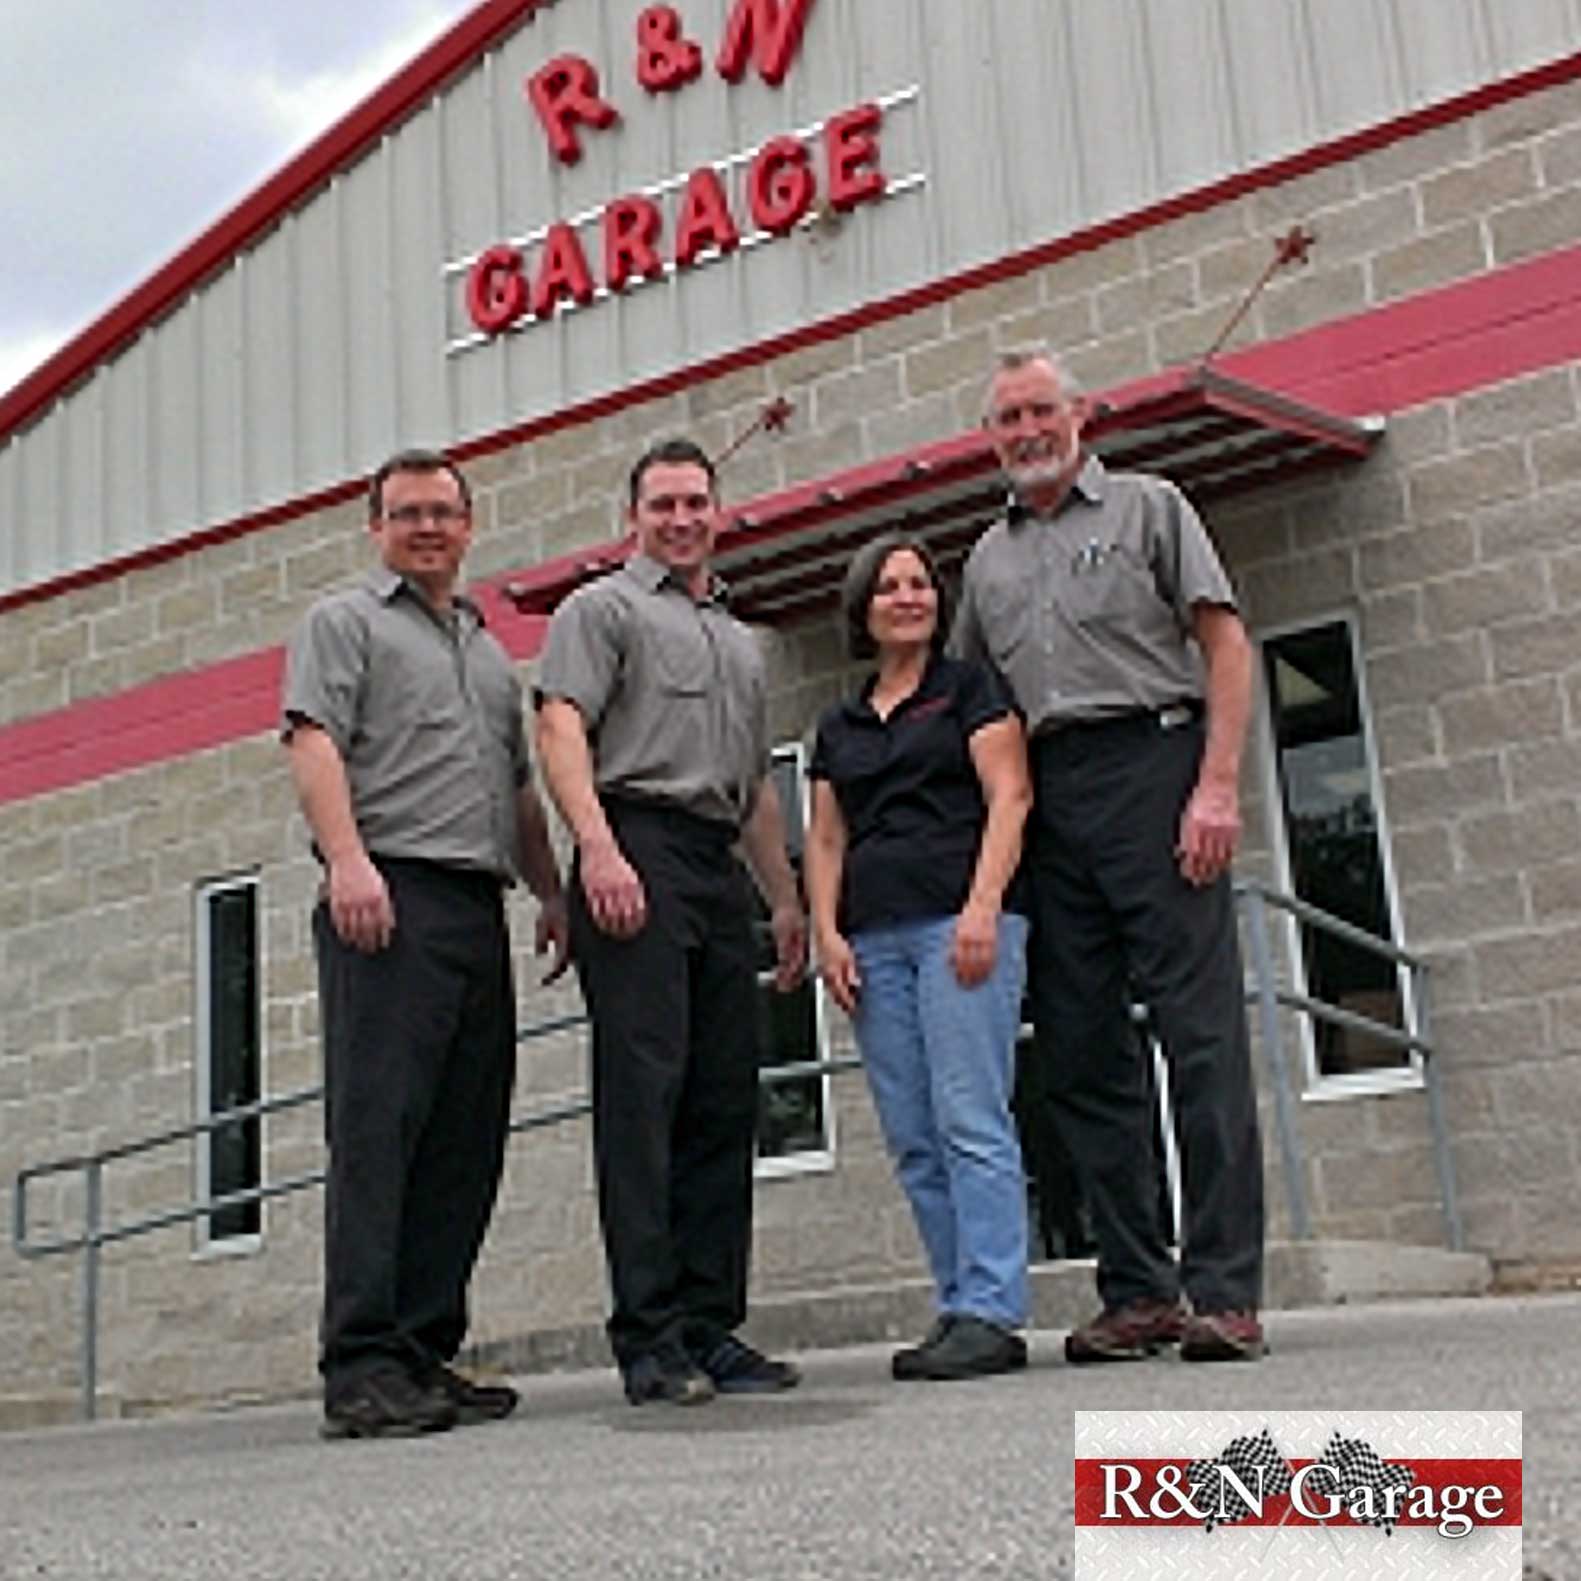 R&N Garage San Antonio uses dabow payment solutions